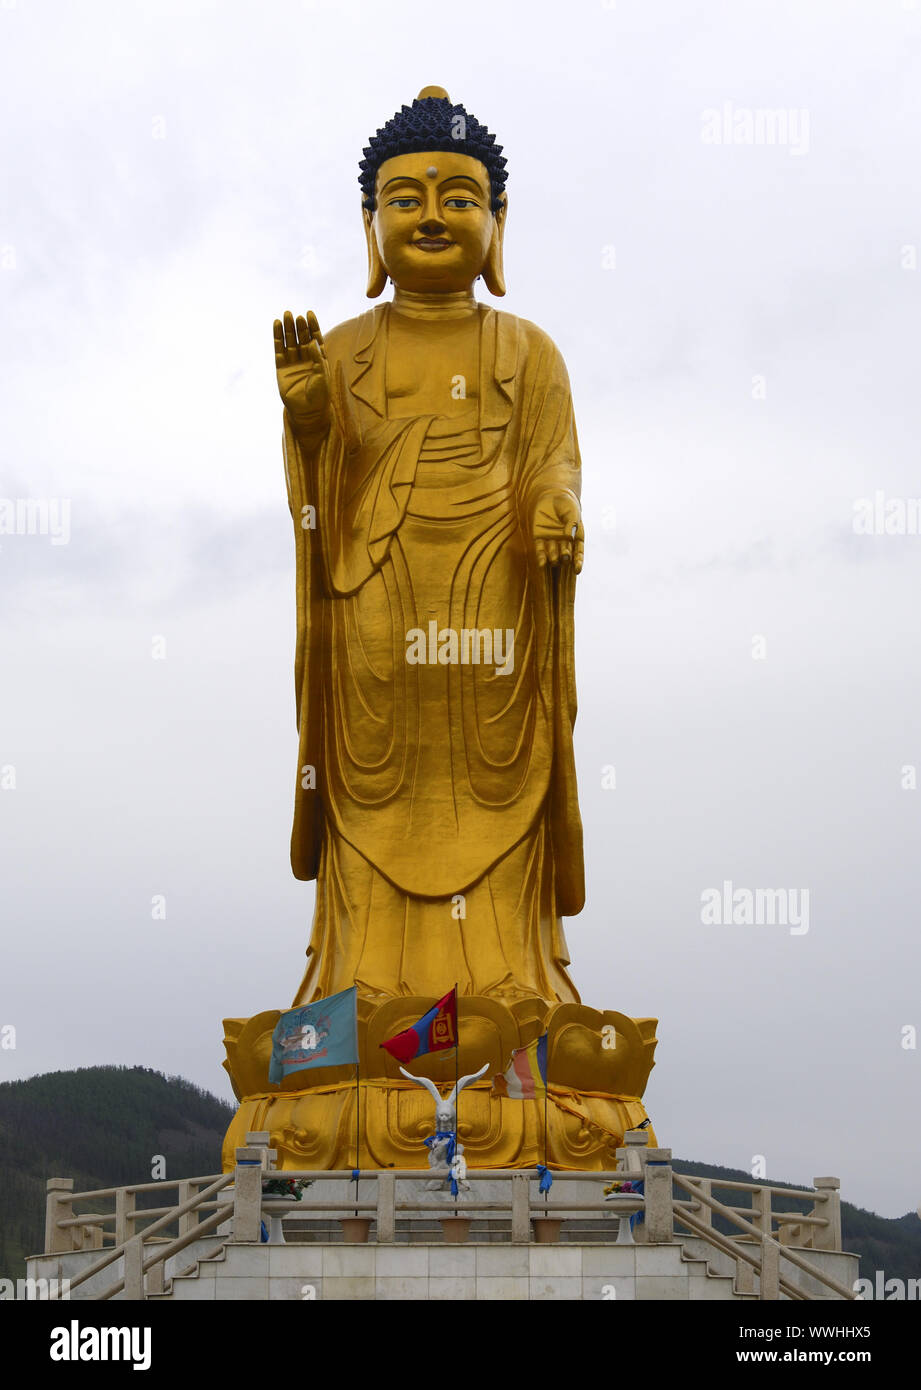 Golden Buddha statue, Ulanbator, Mongolie Banque D'Images